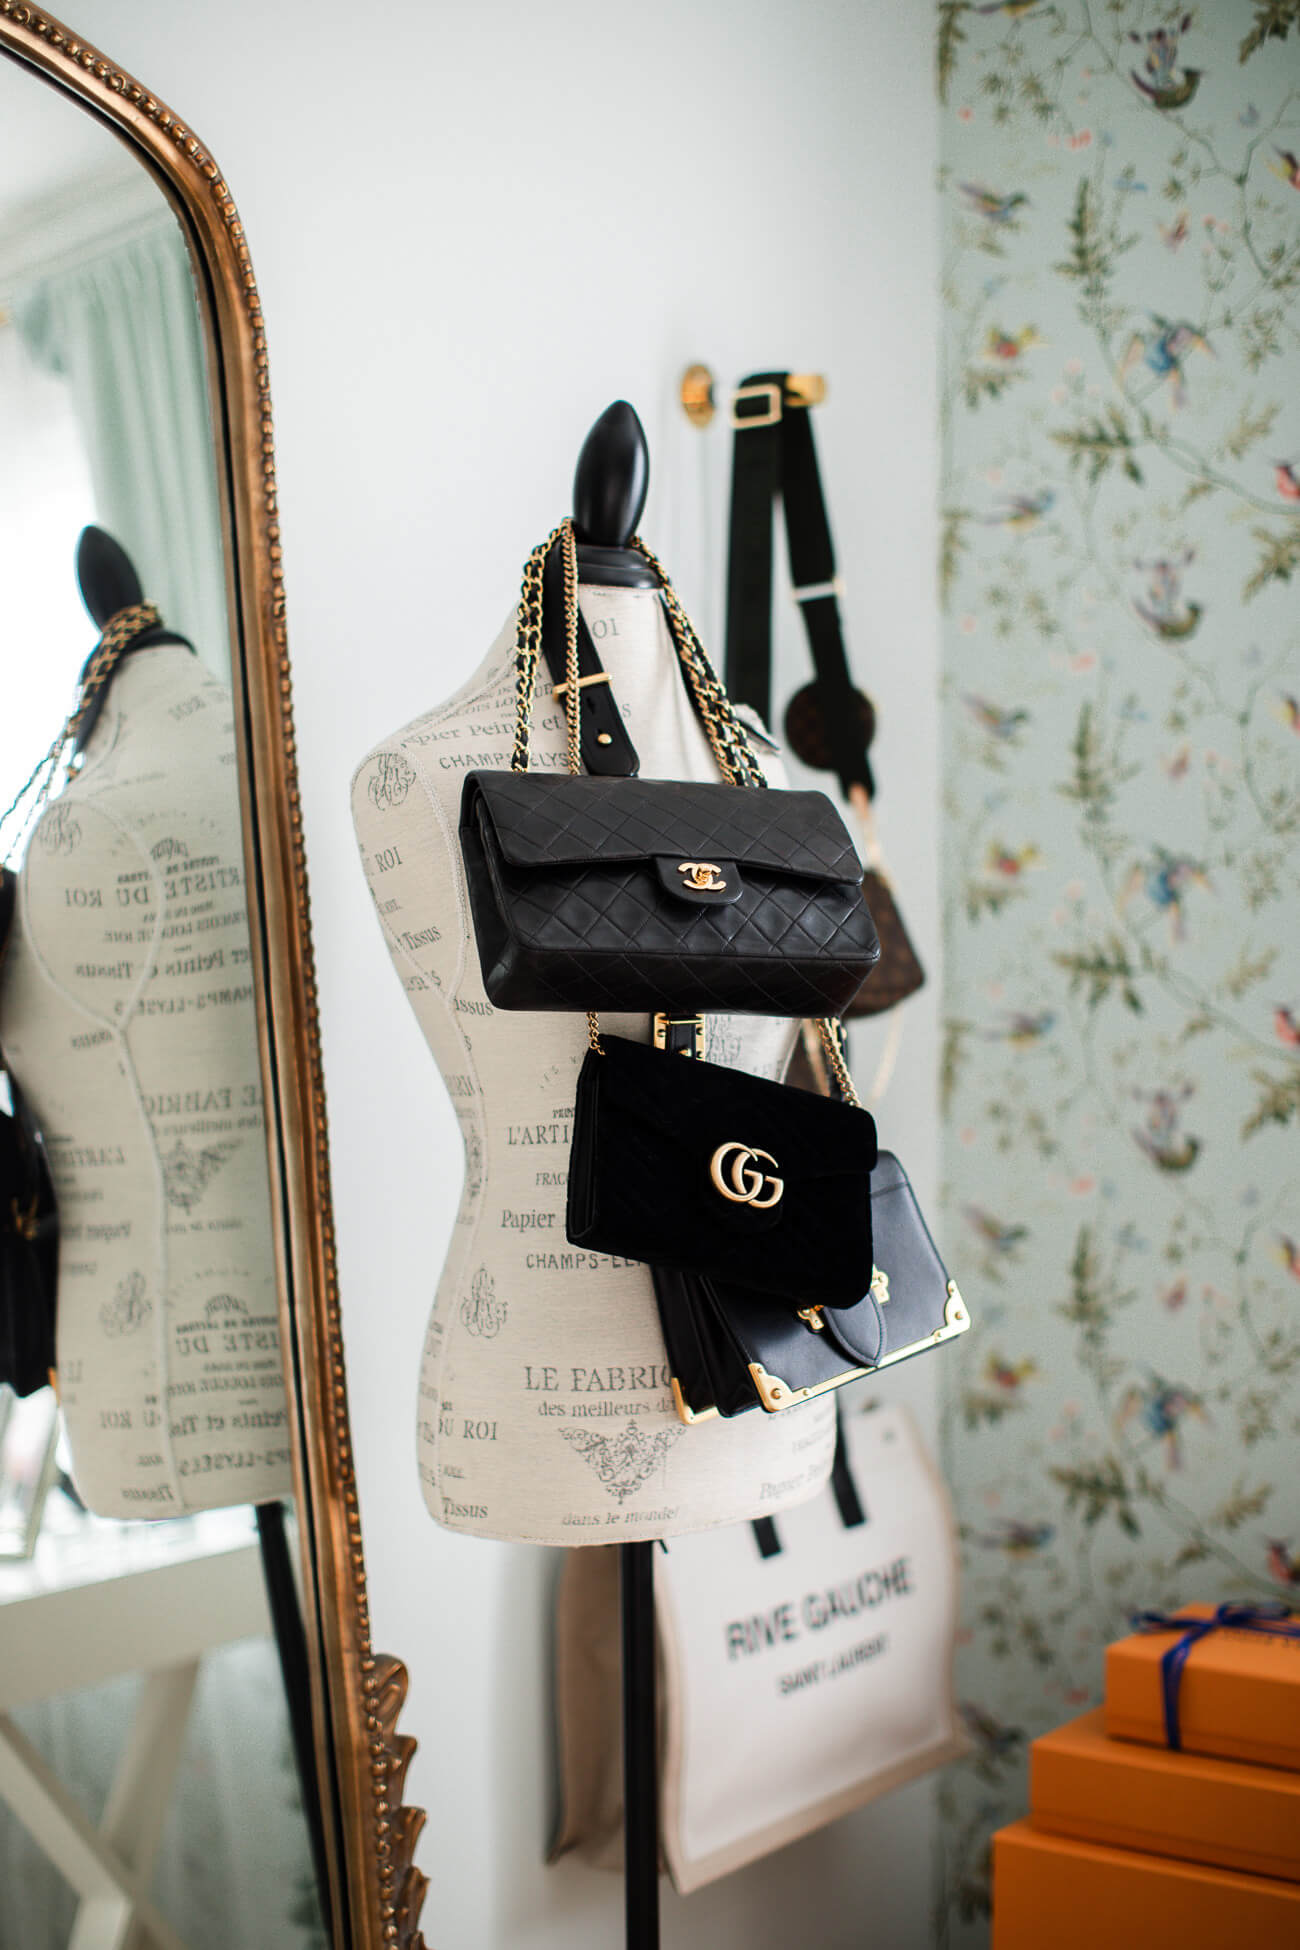 dress form displaying handbags fashion blogger home office